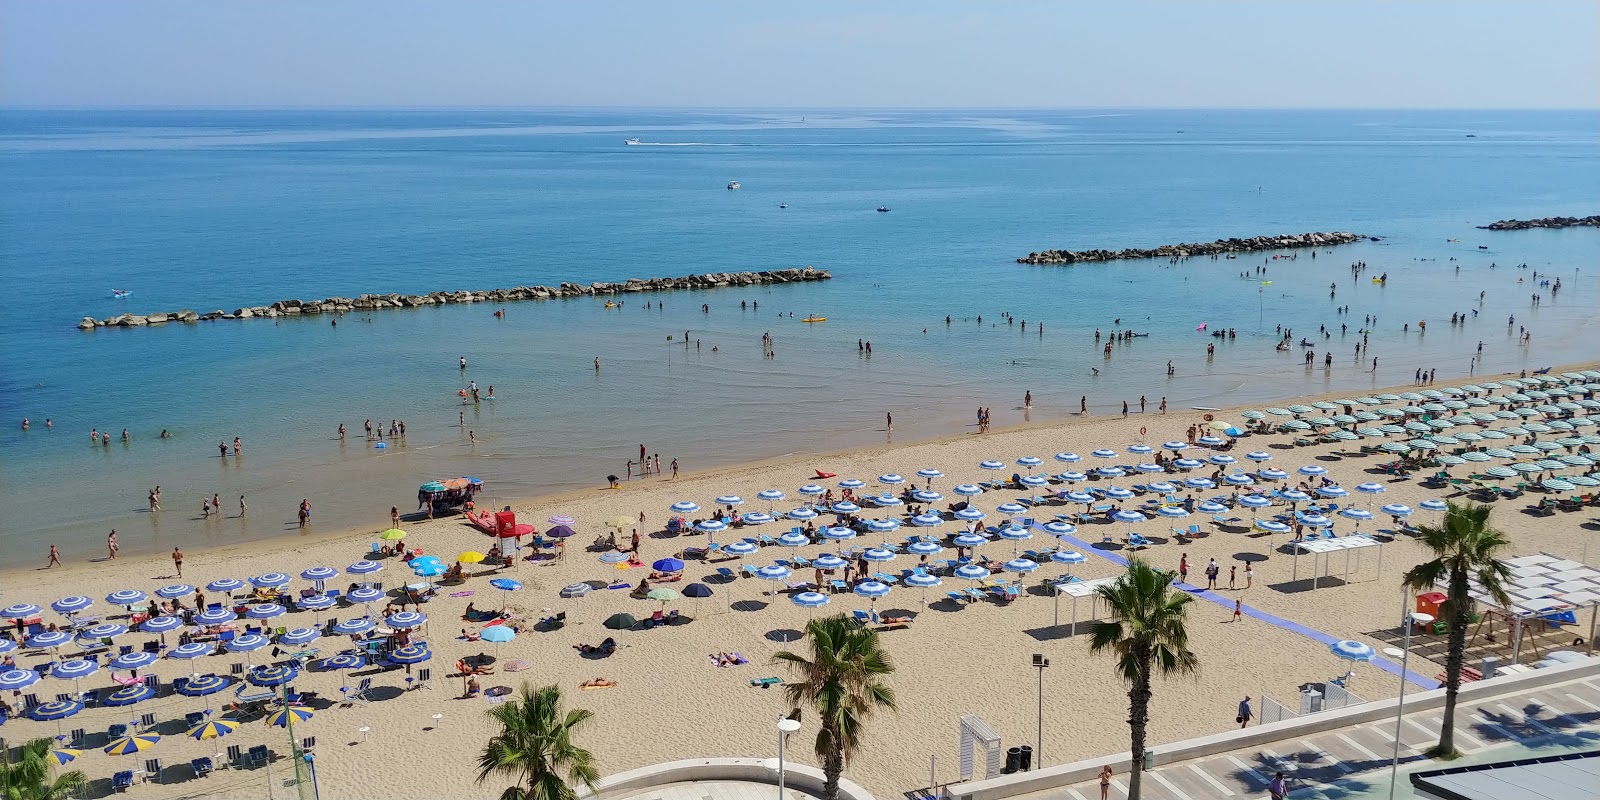 Fotografija Plaža Sant'Antonio z turkizna čista voda površino